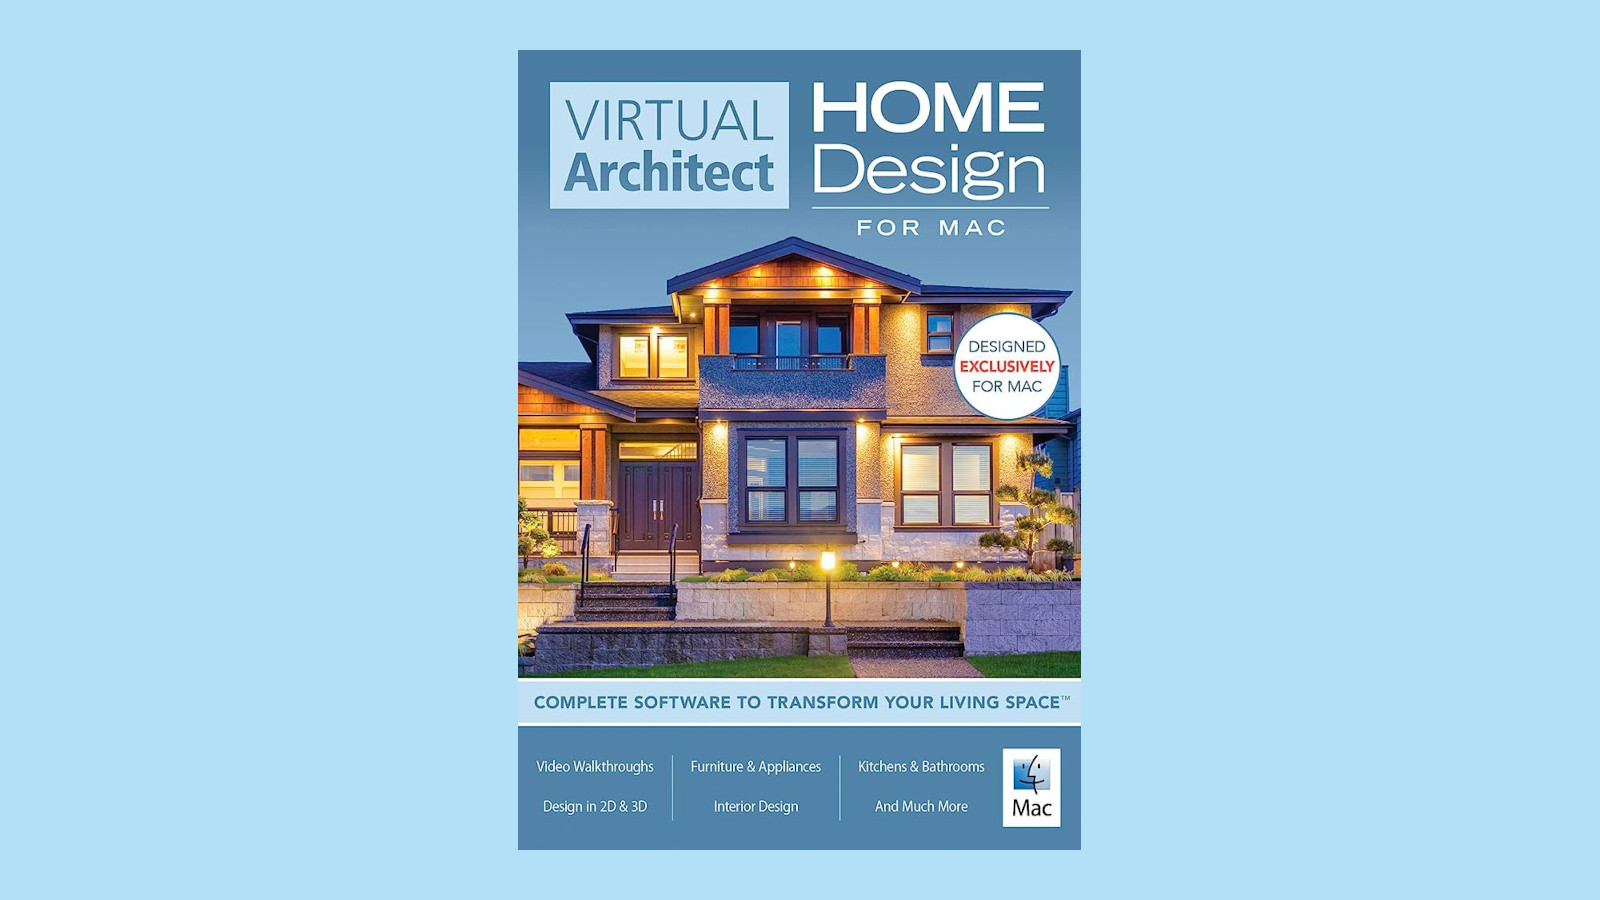 Virtual Architect Home Design for Mac CD Key, 32.6$